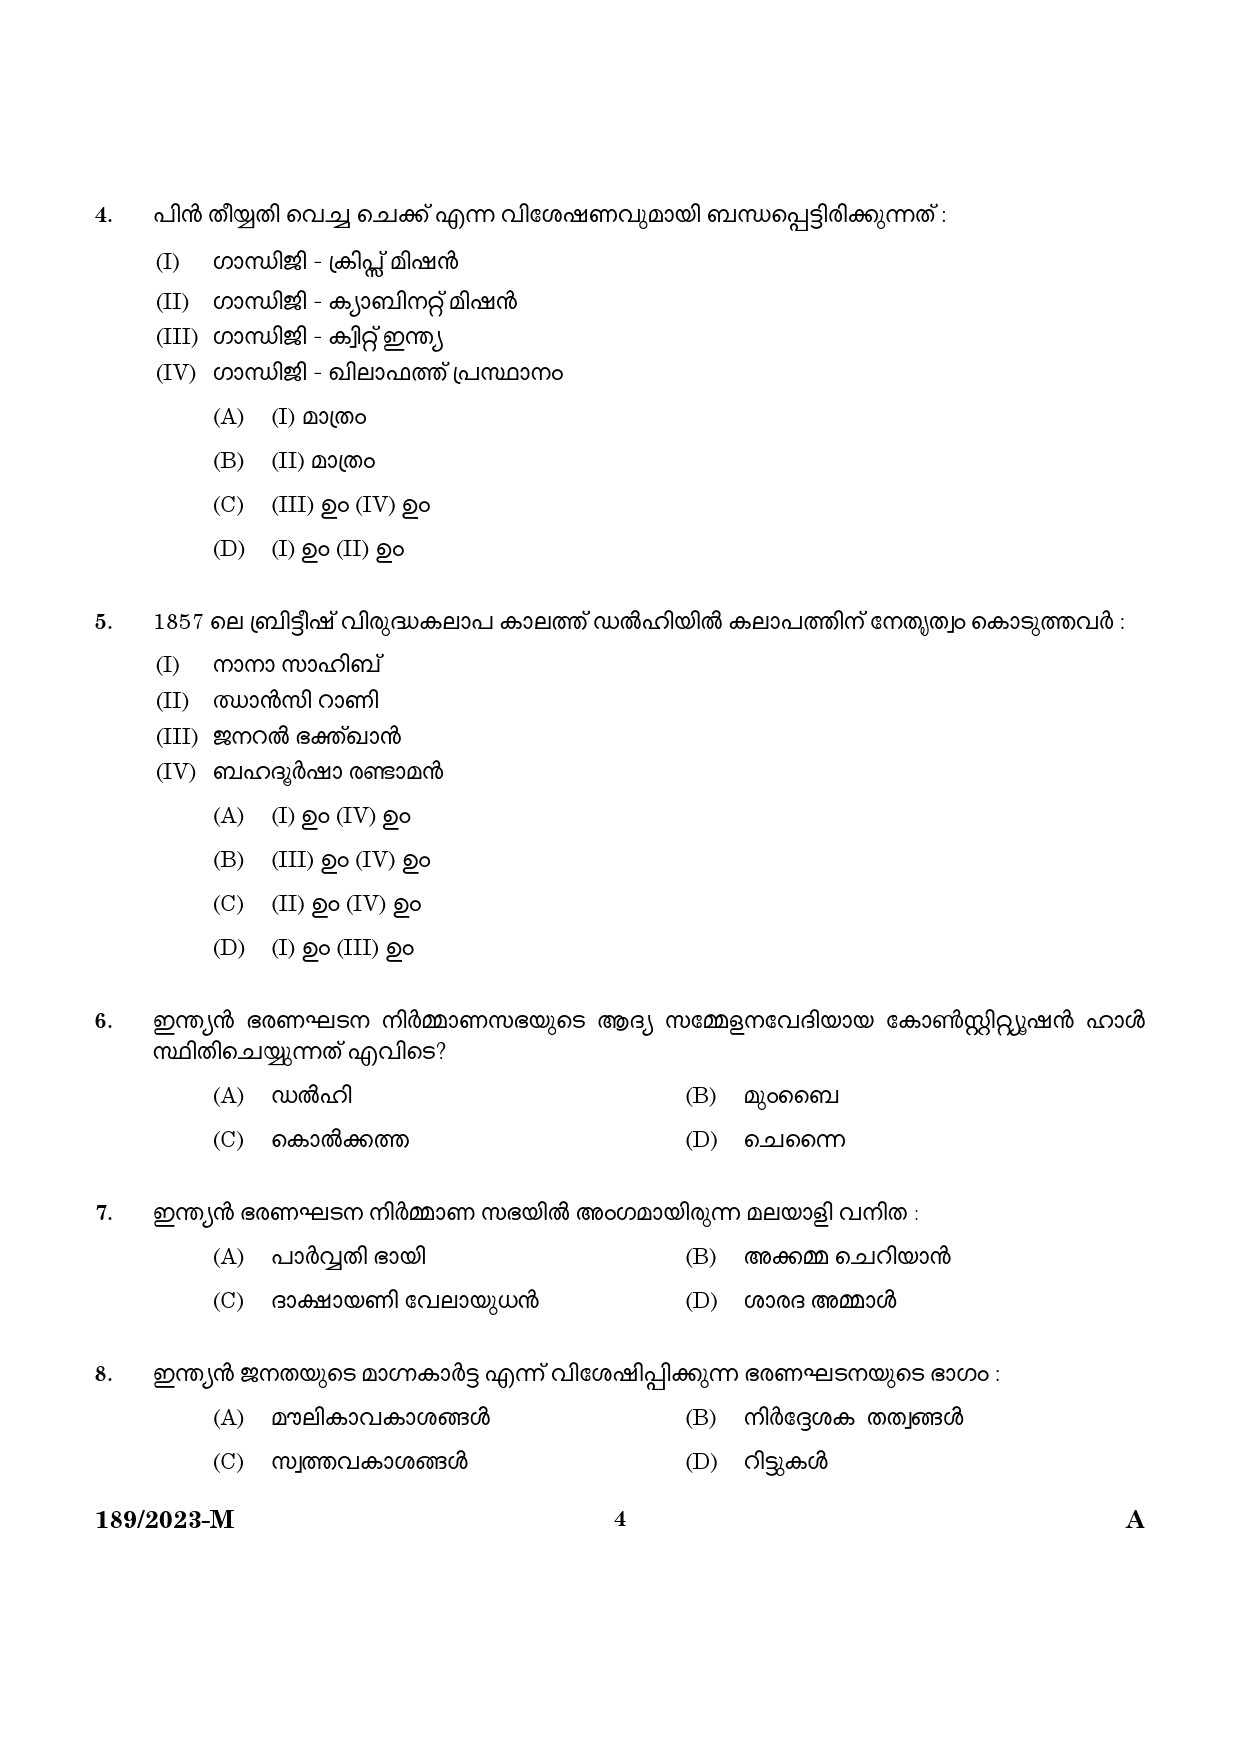 KPSC LGS Malayalam Exam 2023 Code 1892023 M 2